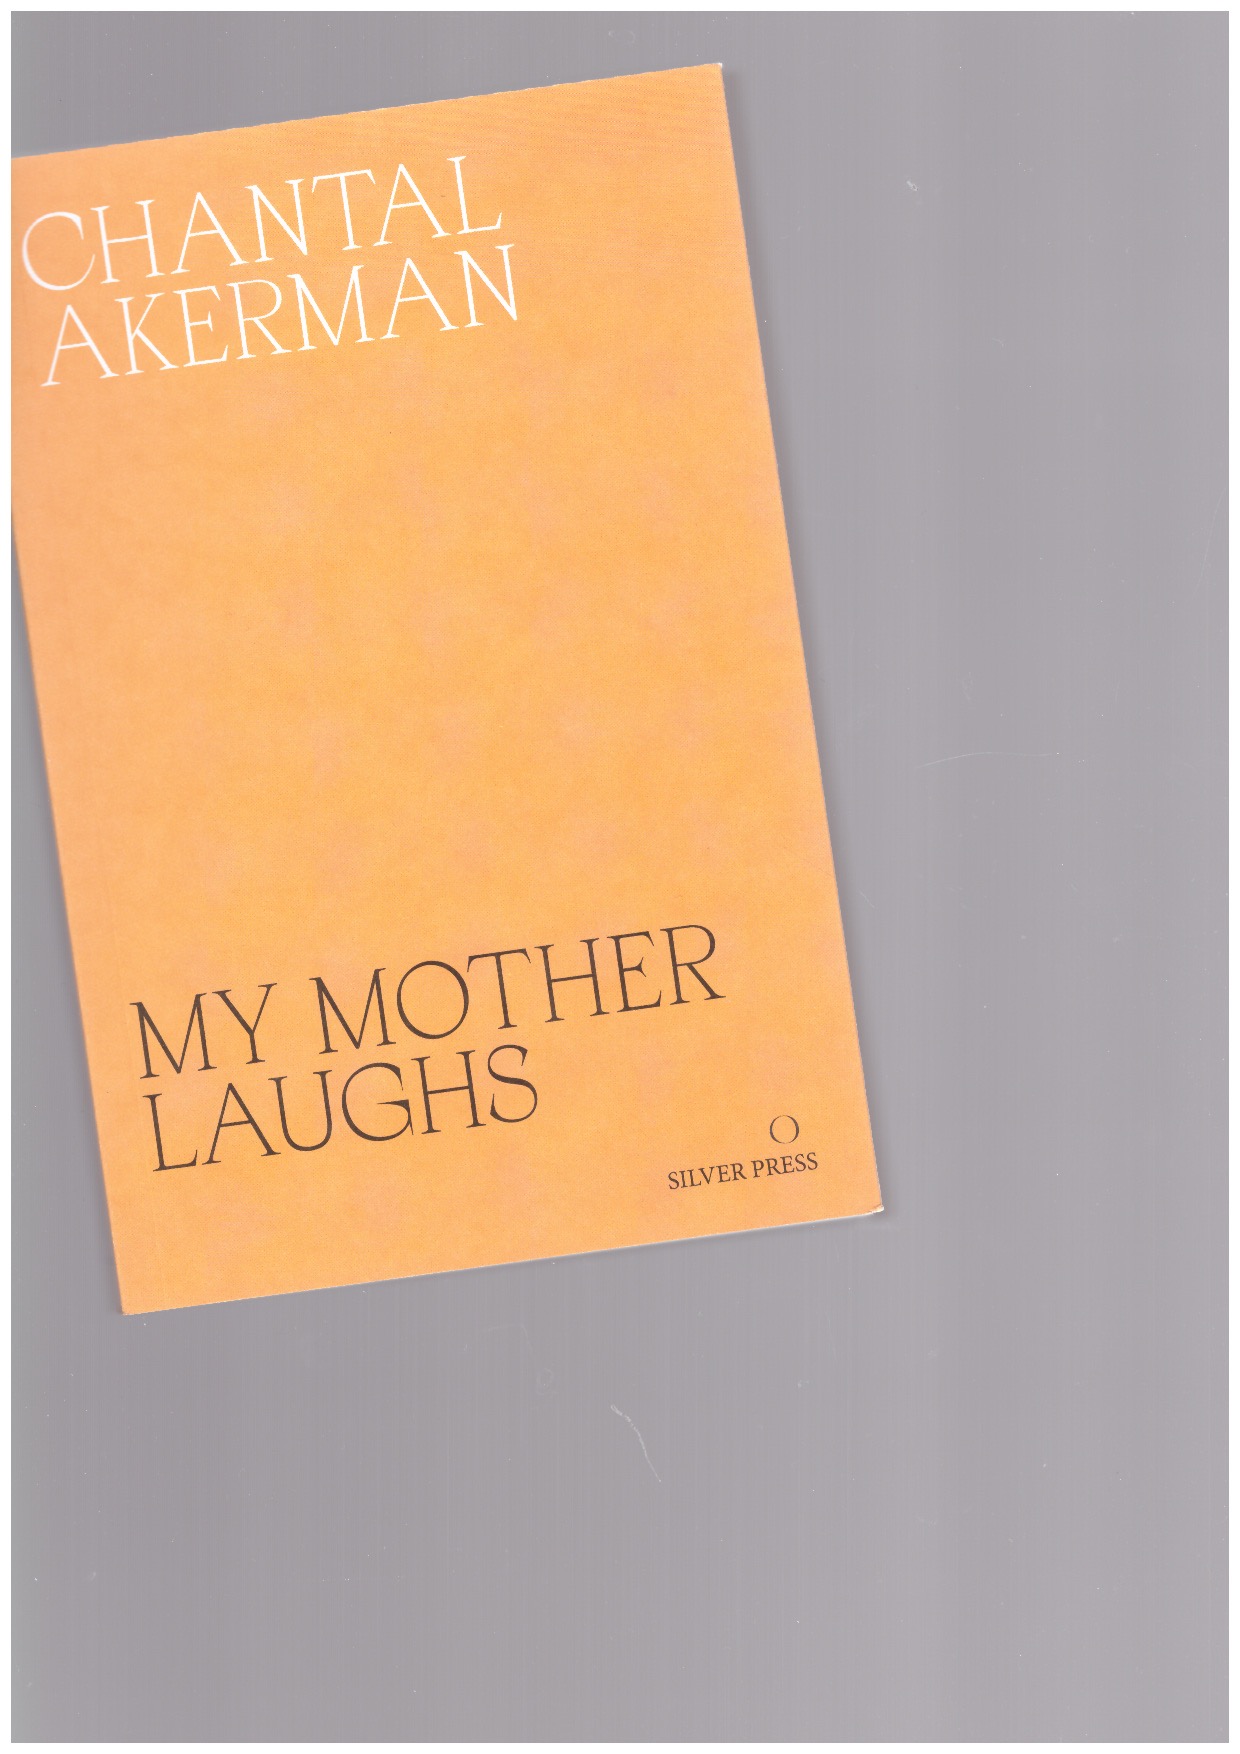 ACKERMAN, Chantal - My Mother Laughs [Silver Press]